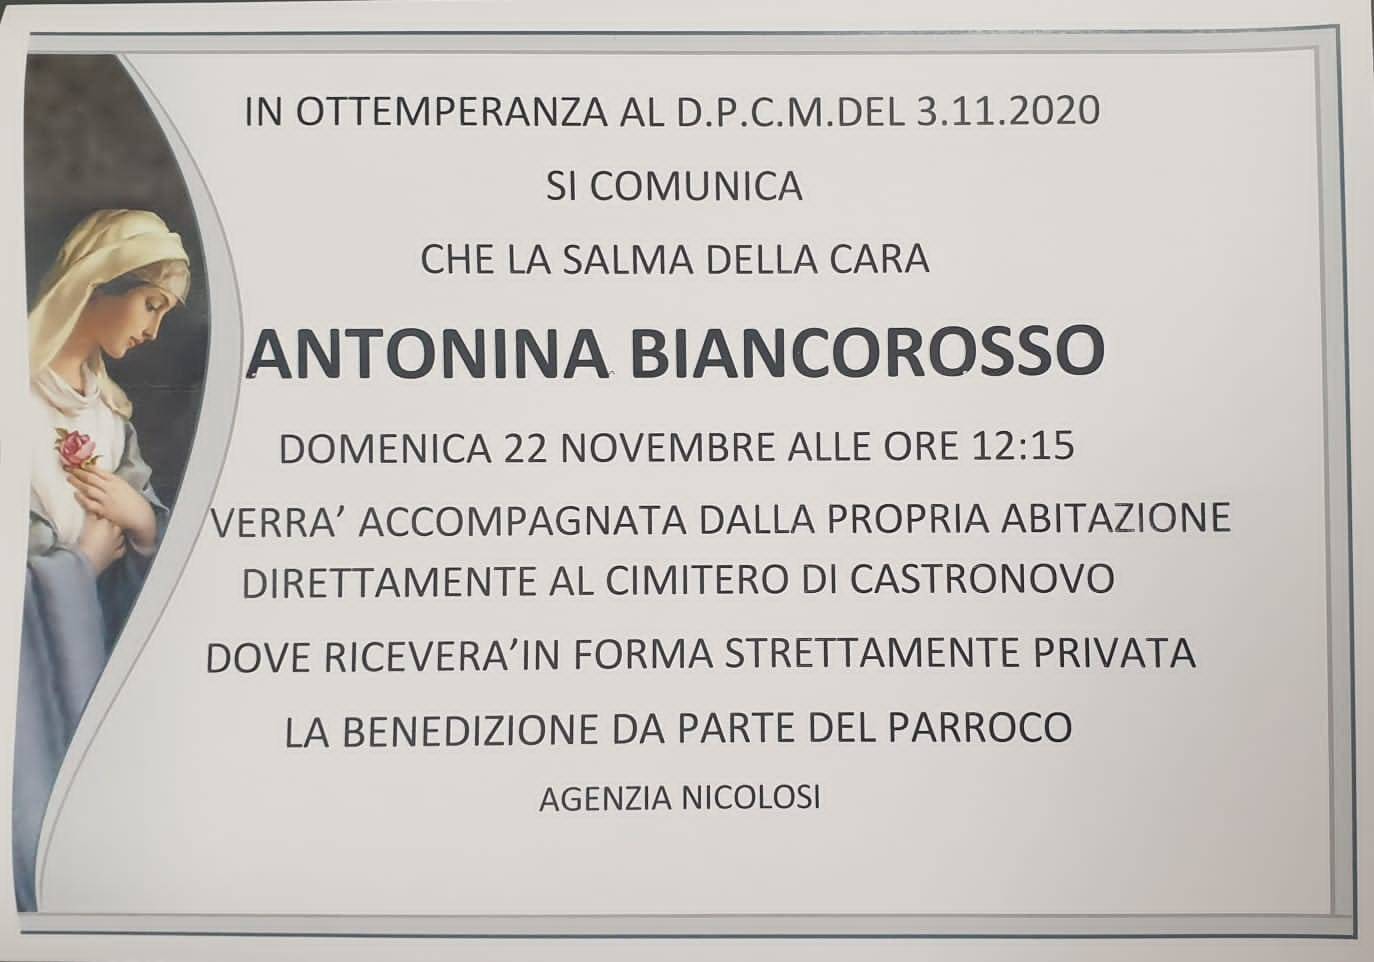 Antonina Biancorosso